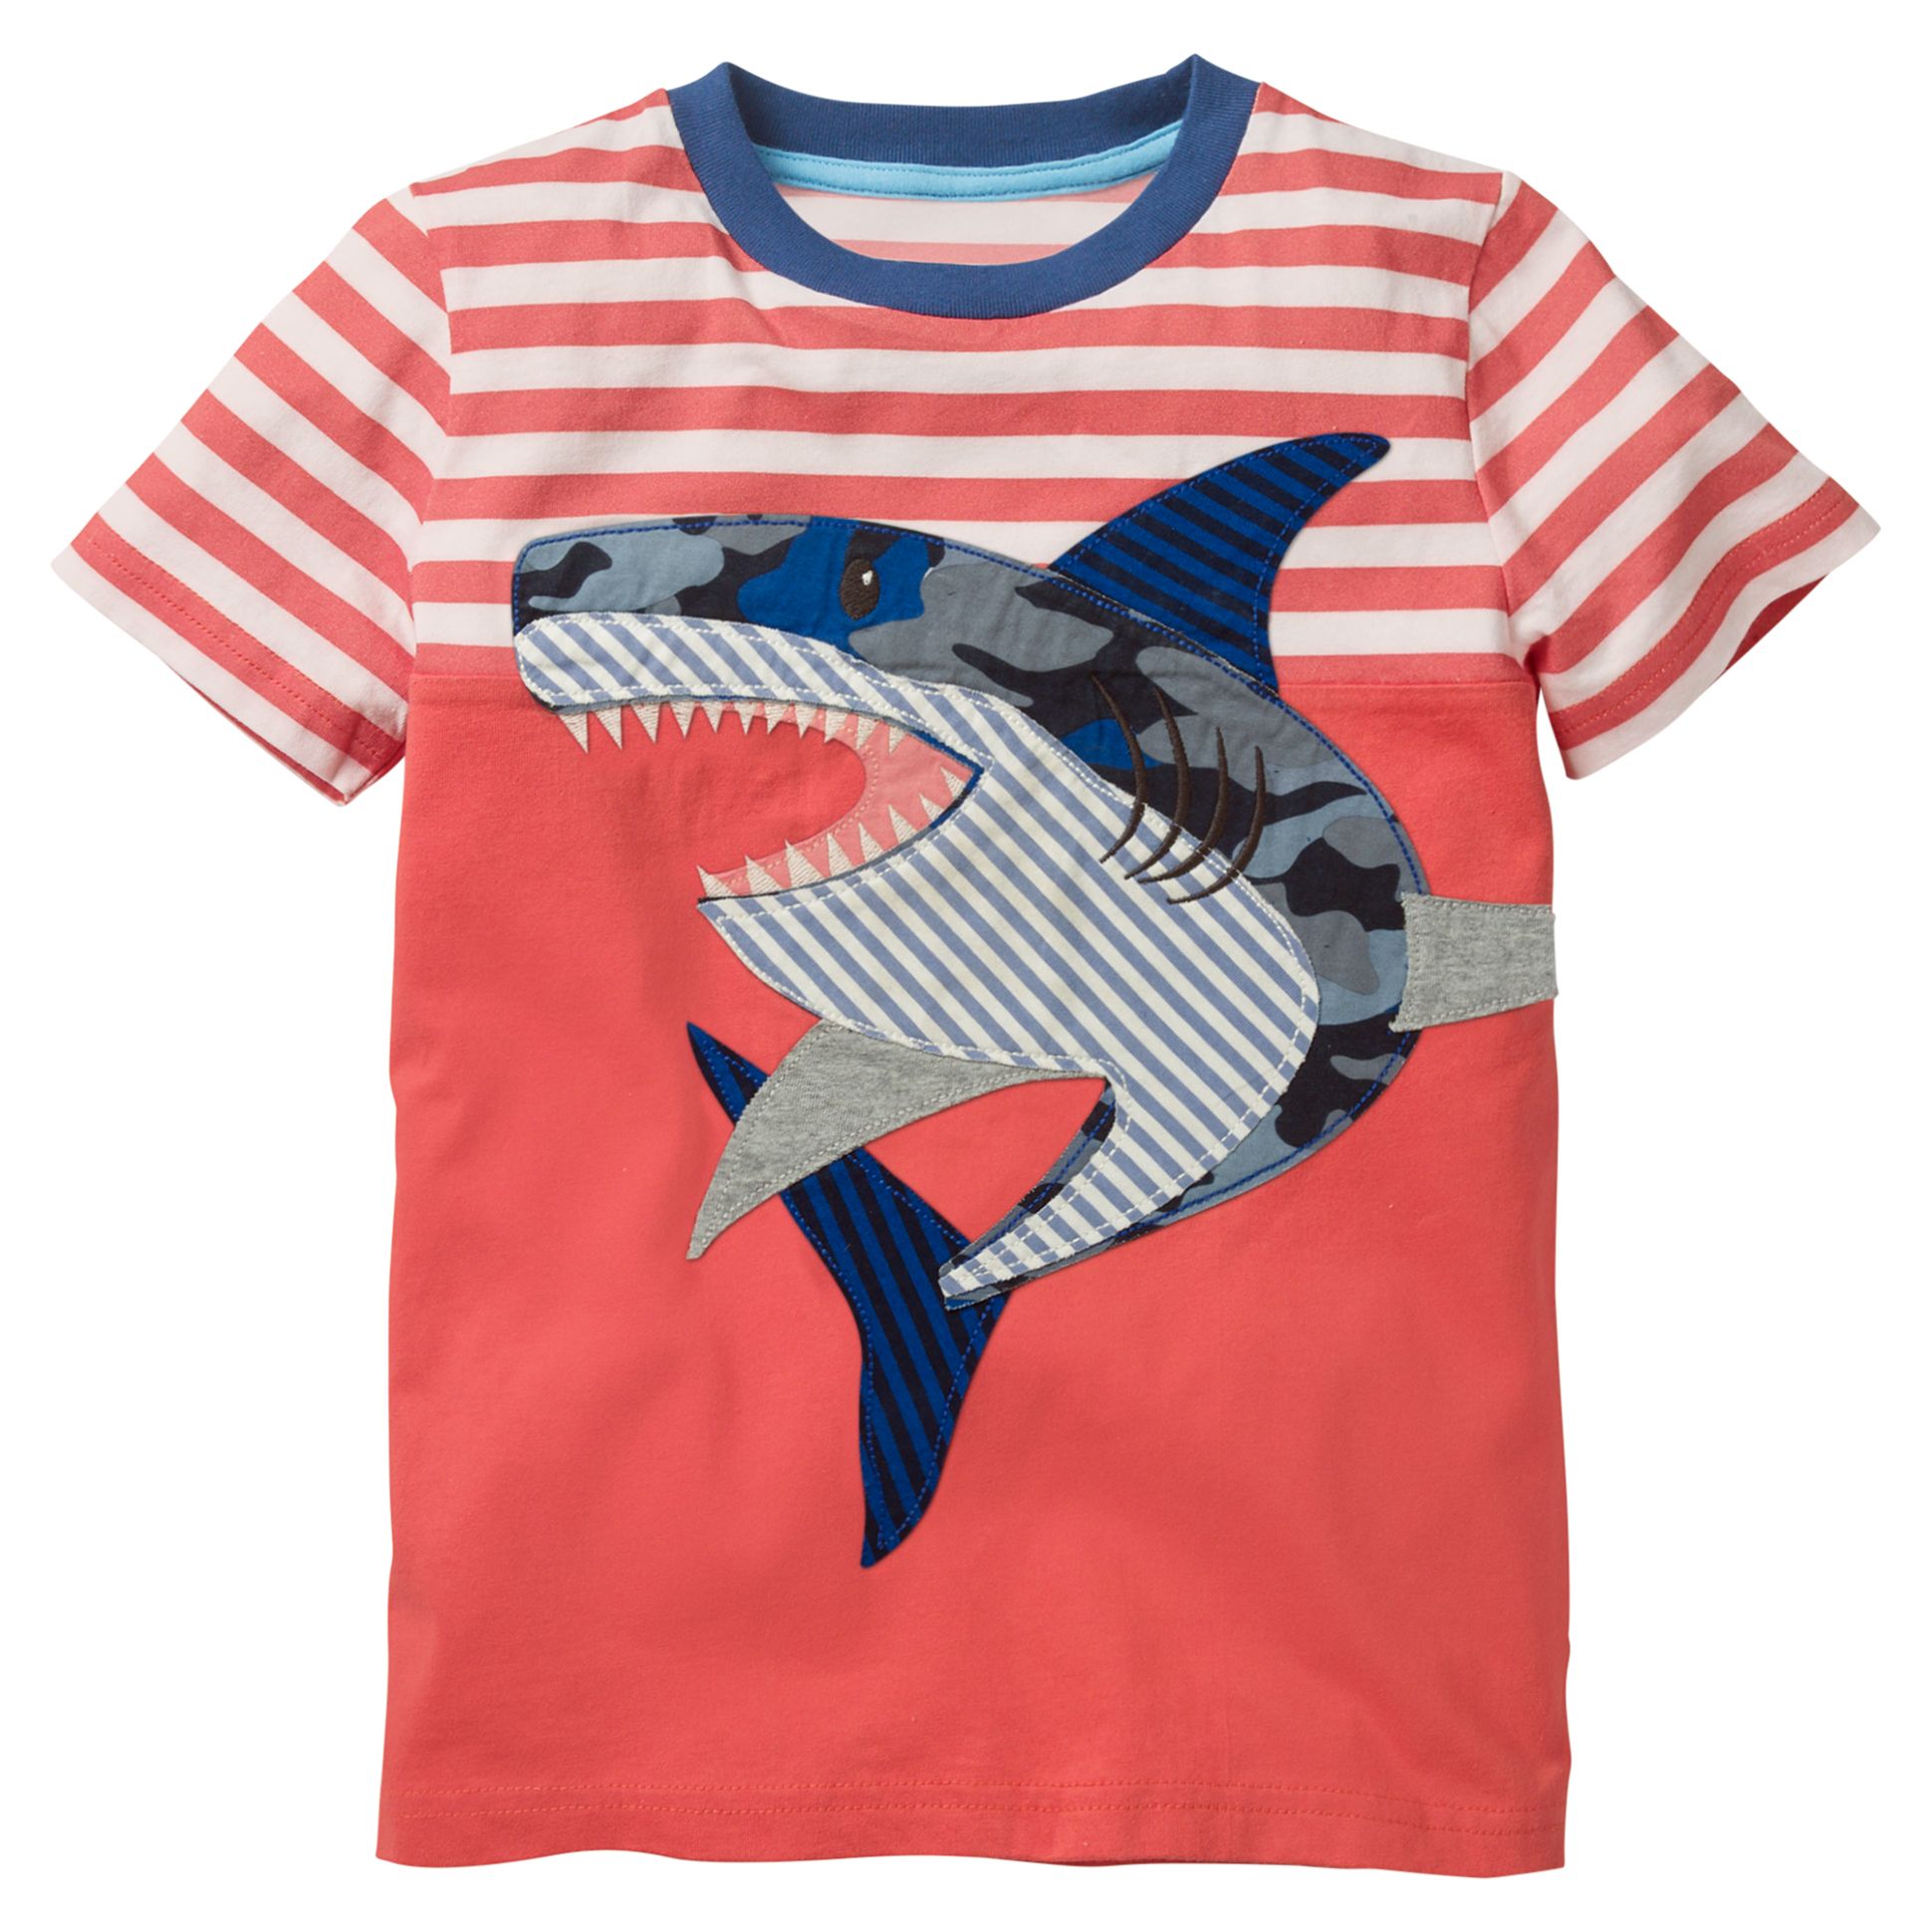 Mini Boden Boys' Striped Applique Shark T-Shirt, Red at John Lewis ...